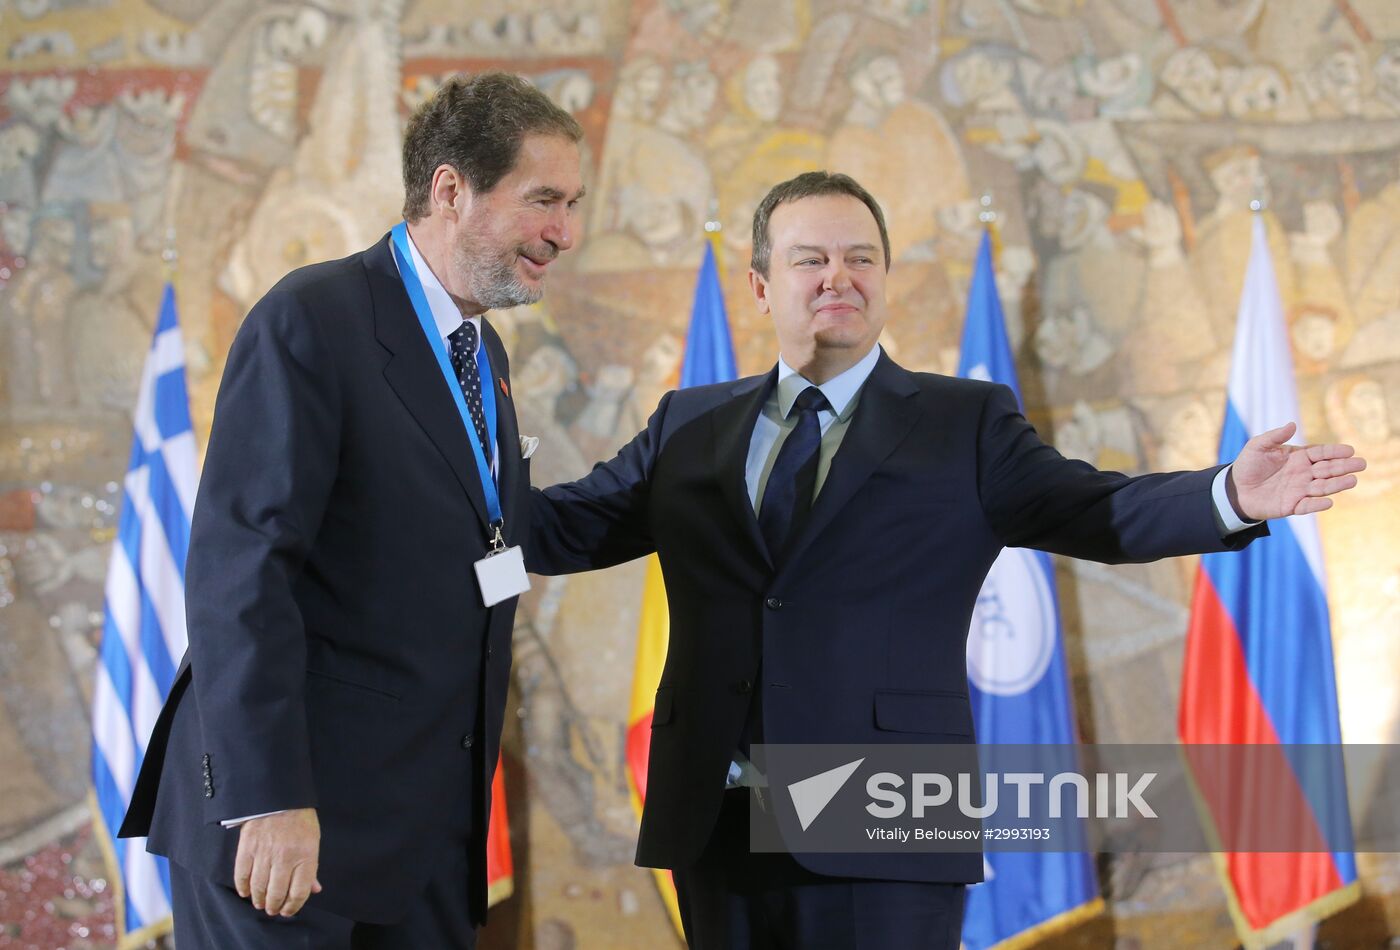 Sergei Lavrov visits Serbia